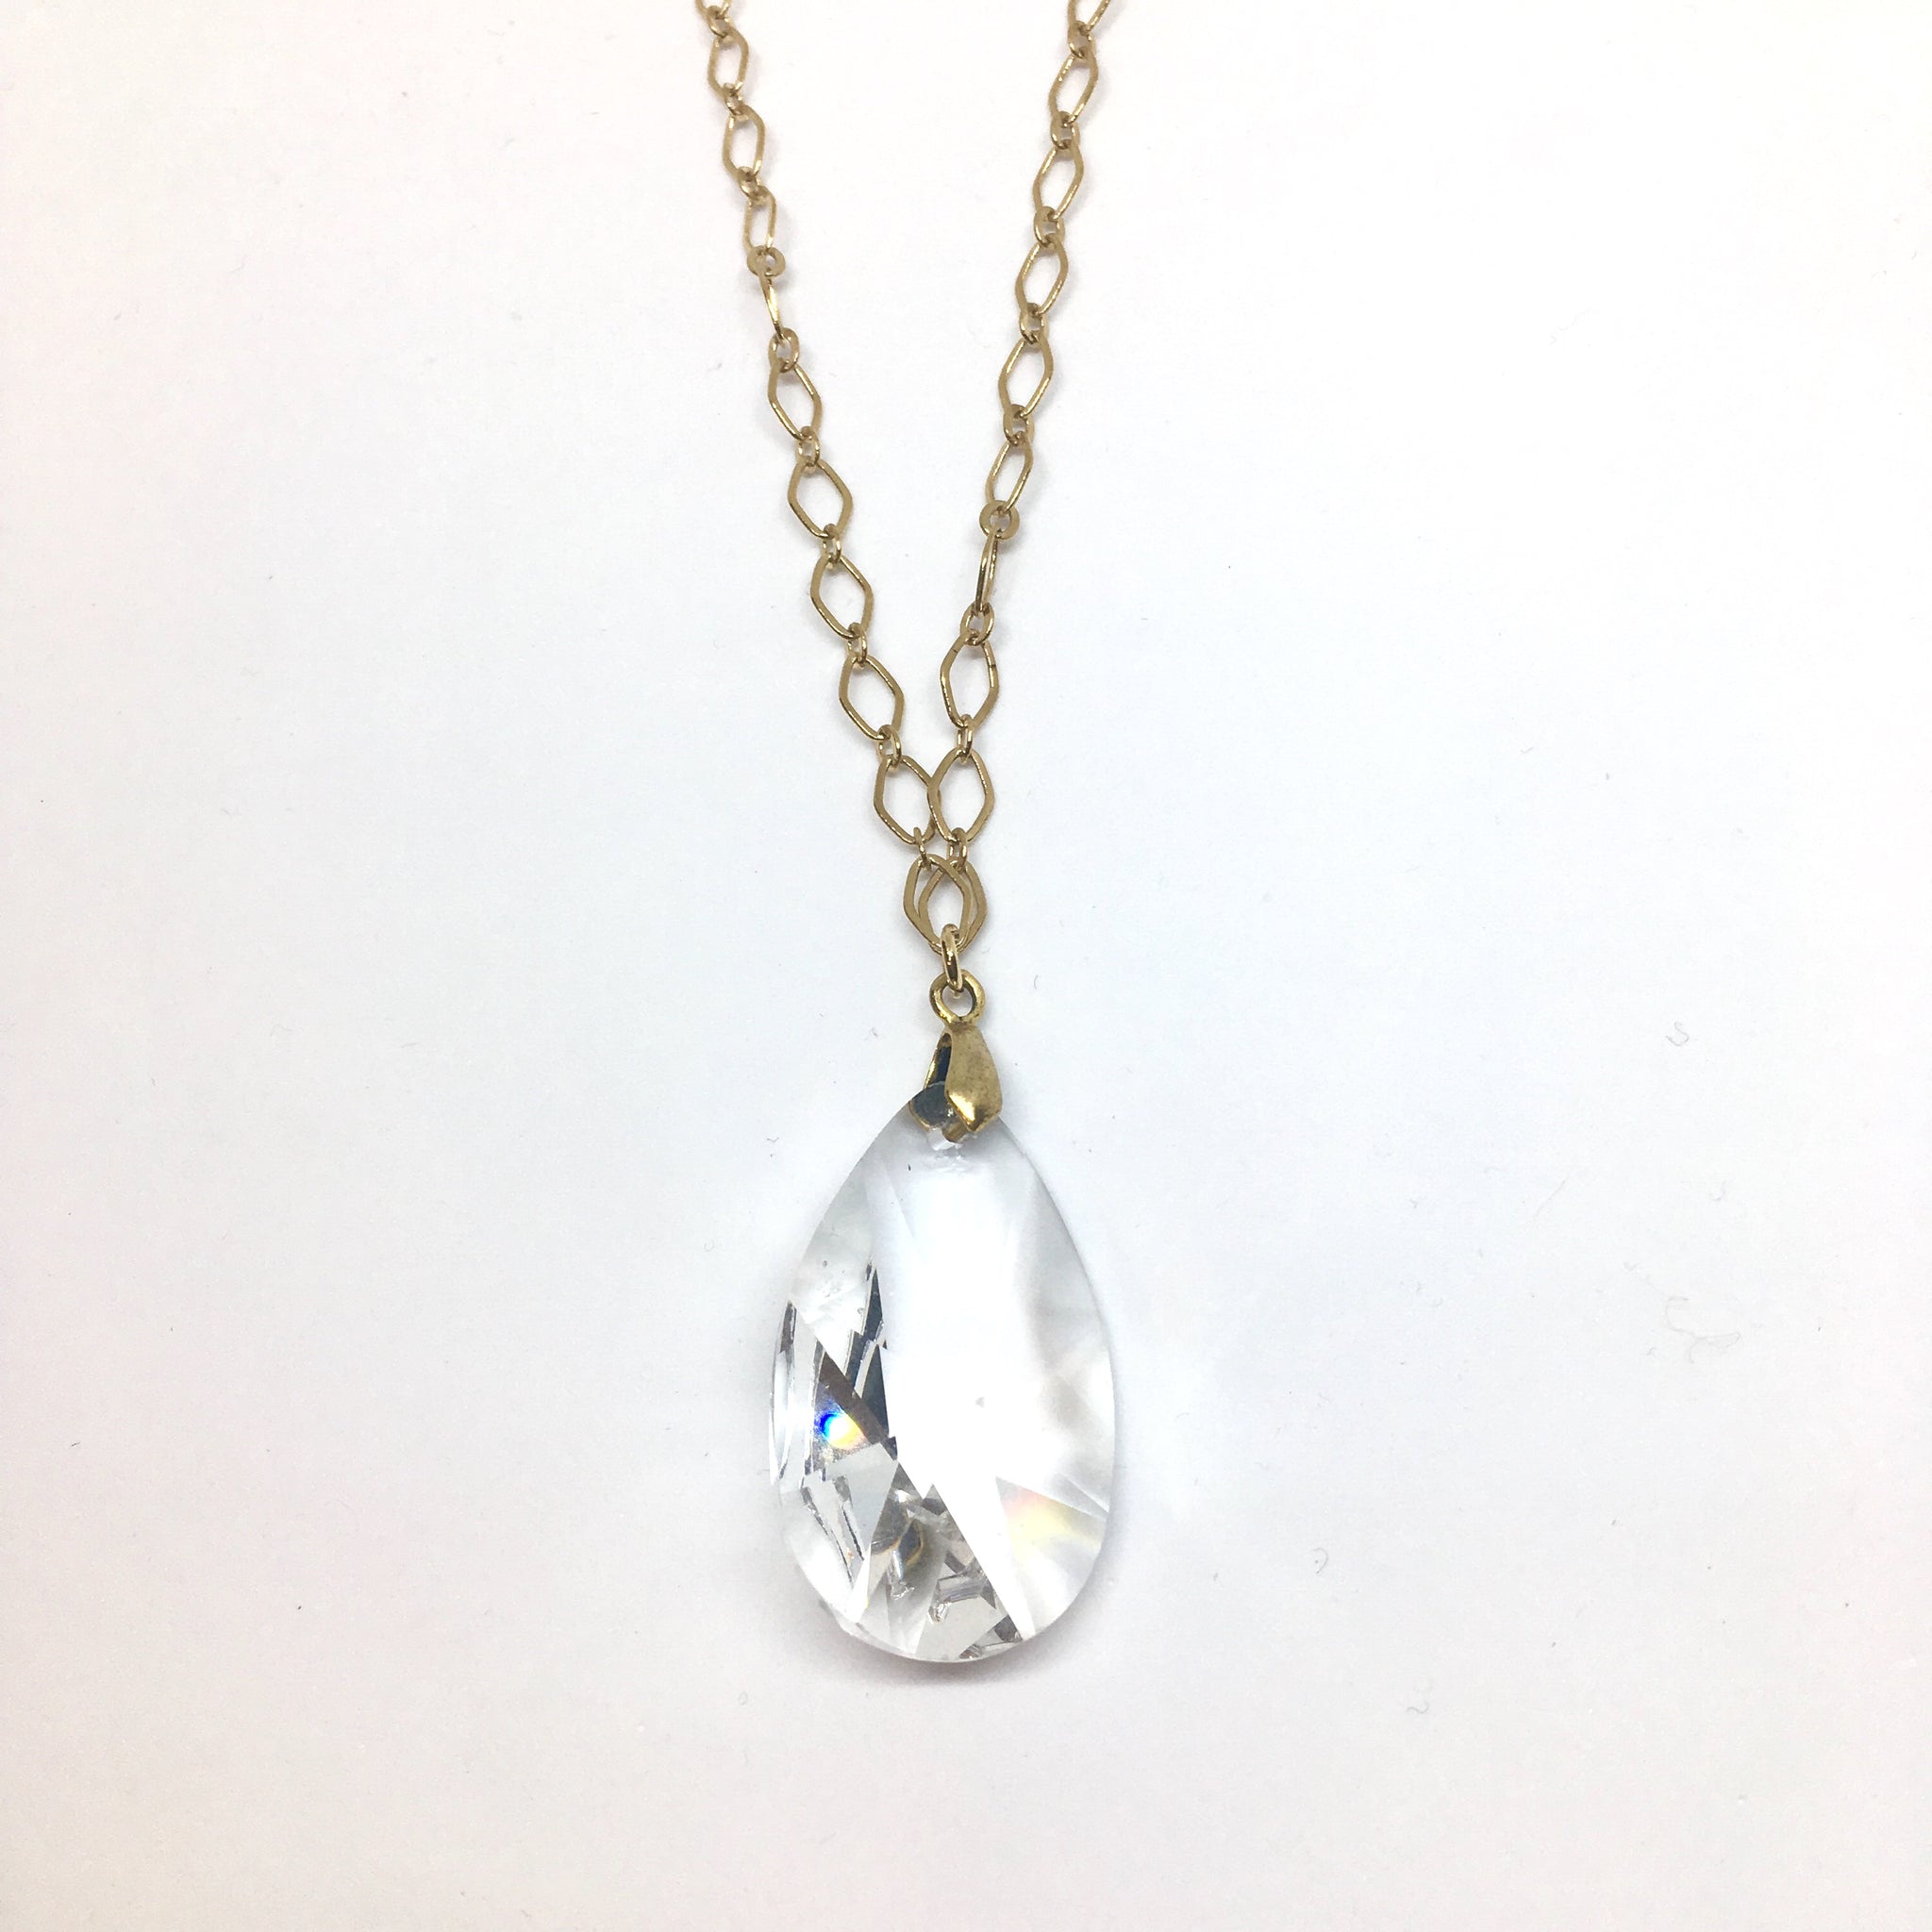 Vintage crystal long necklace